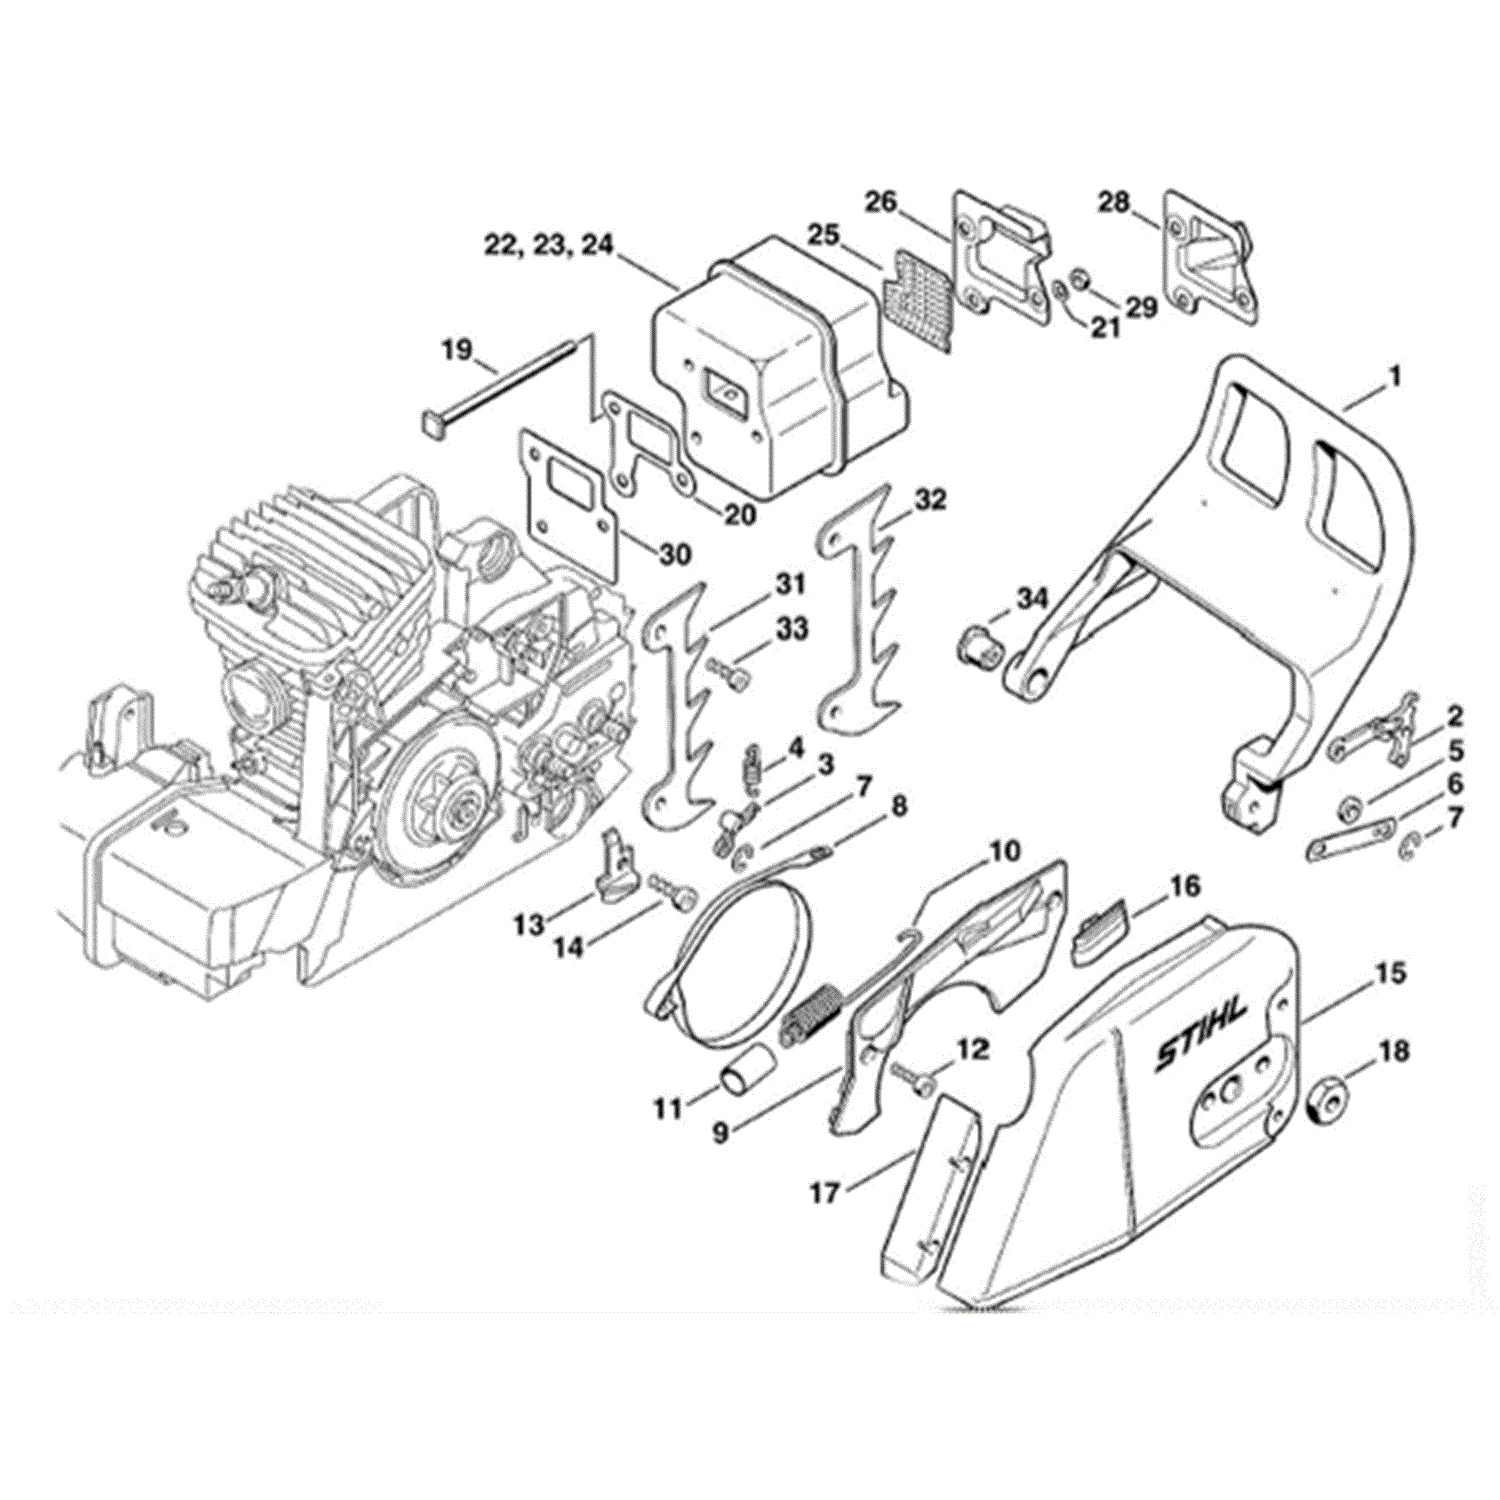 Stihl ms290 chainsaw parts diagram